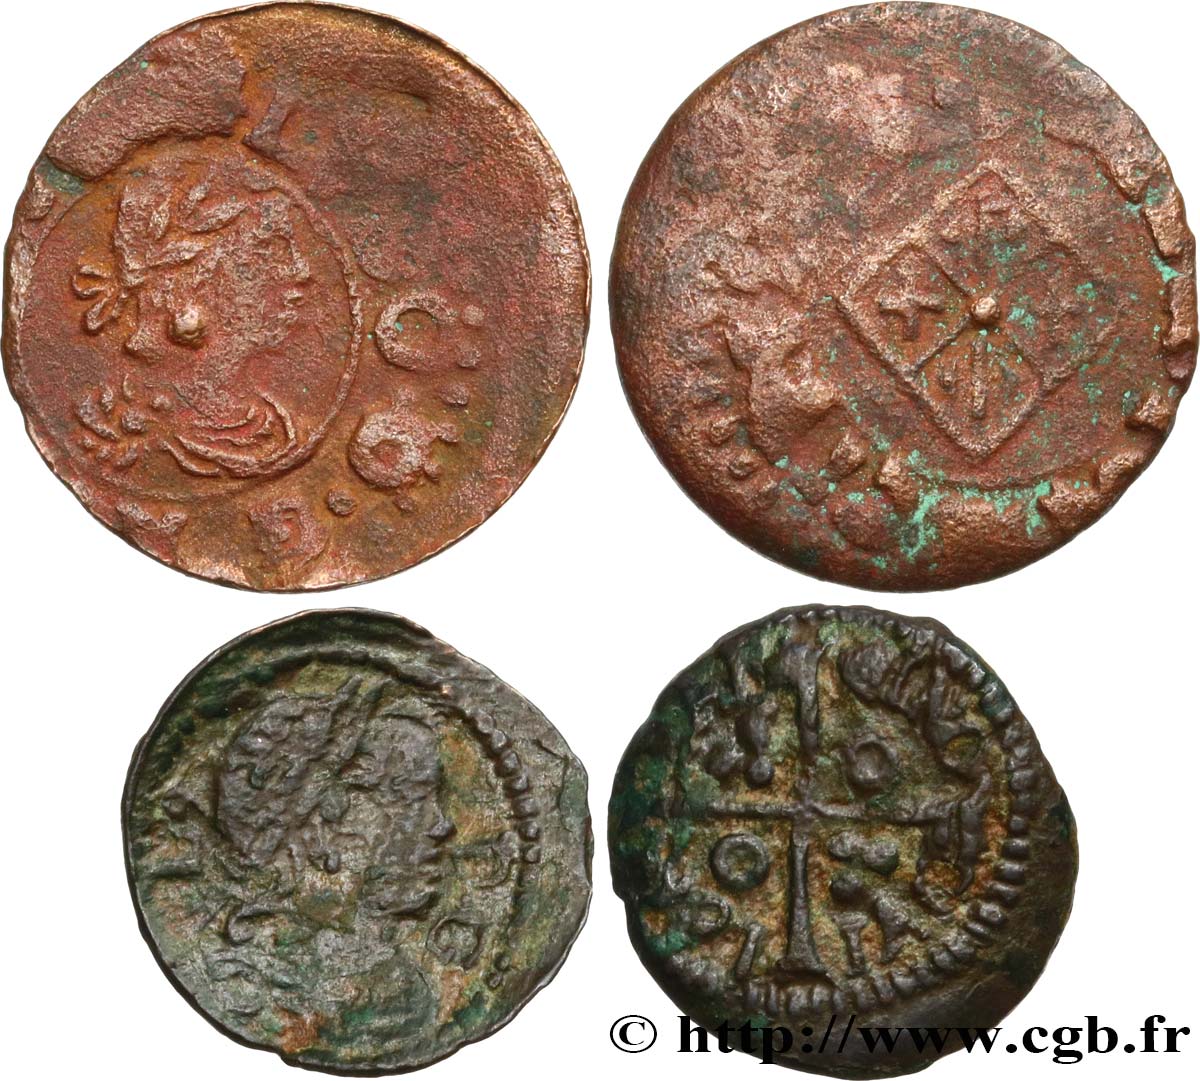 SPANIA - PRINCIPAUTY OF CATALONIA - LOUIS XIII Lot de 2 monnaies royales n.d. Ateliers divers S